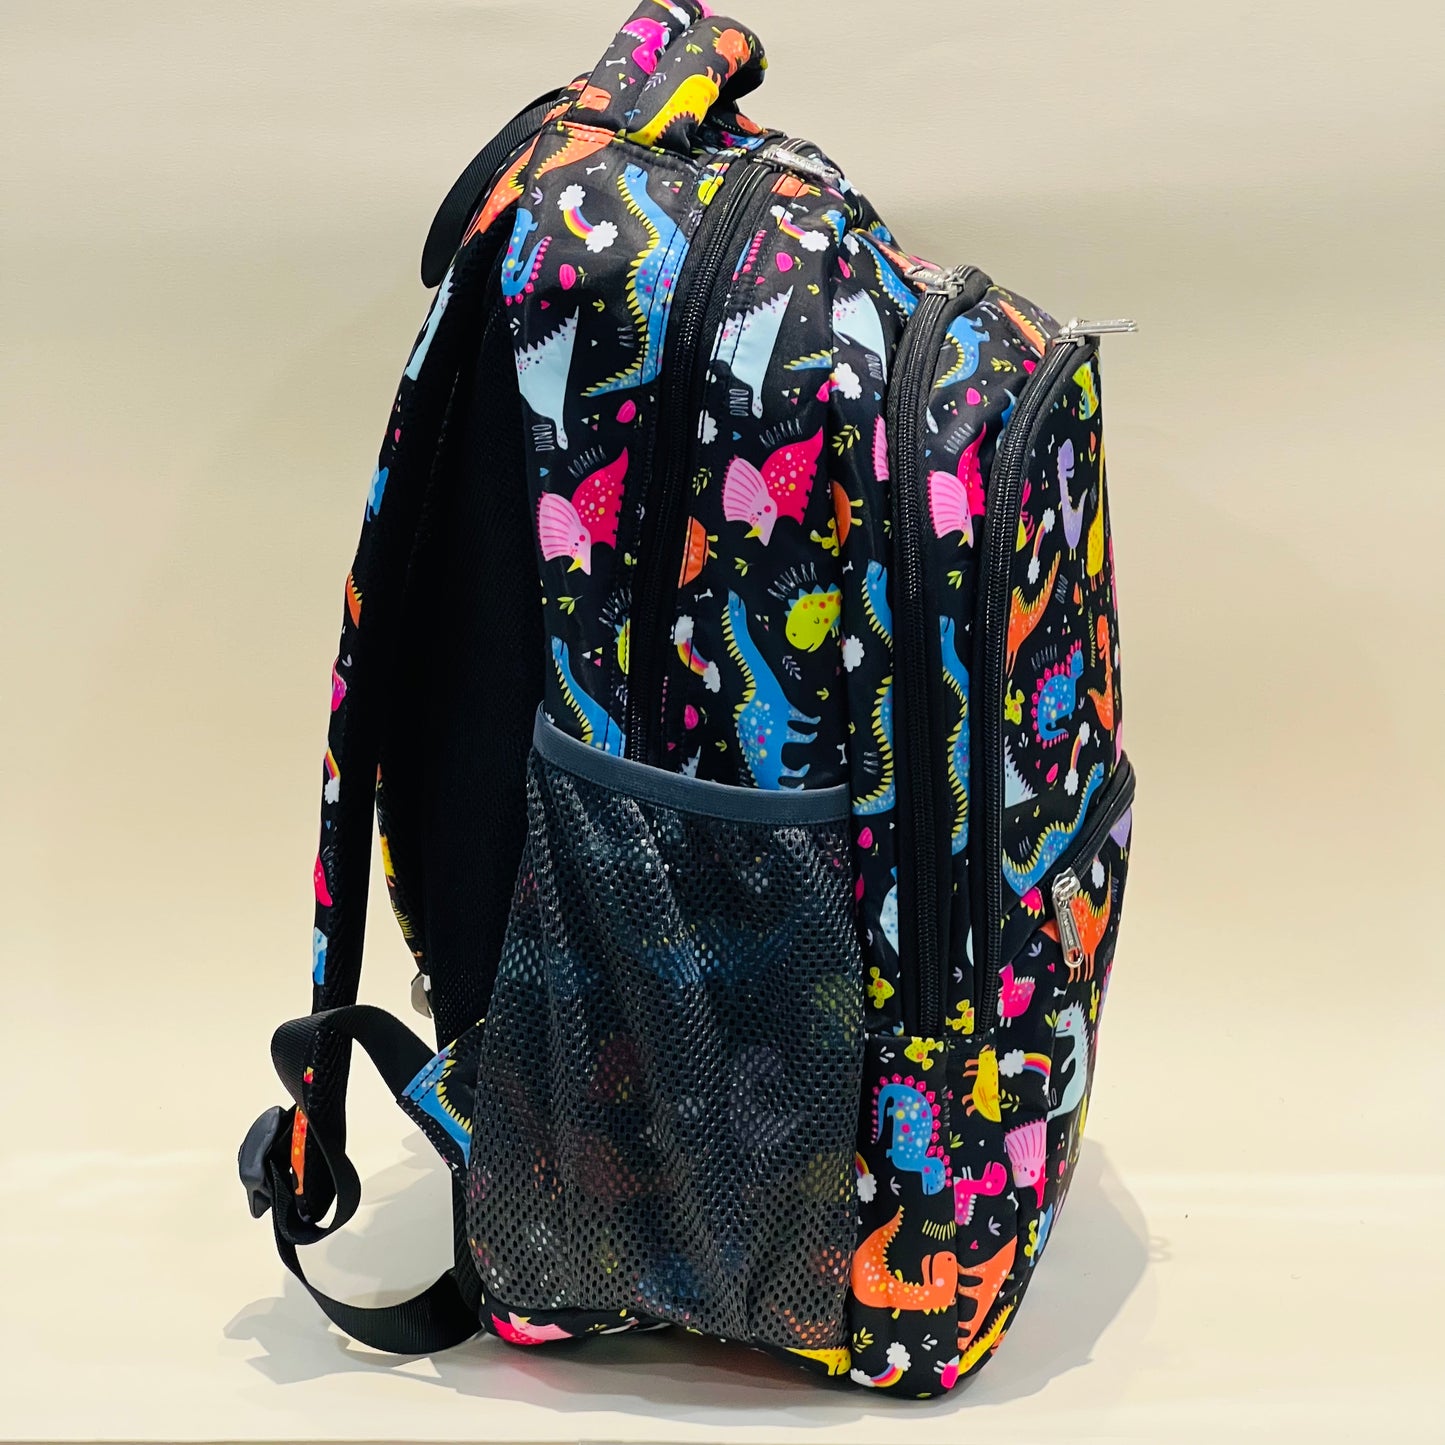 18” Big School Bags - Premium Quality